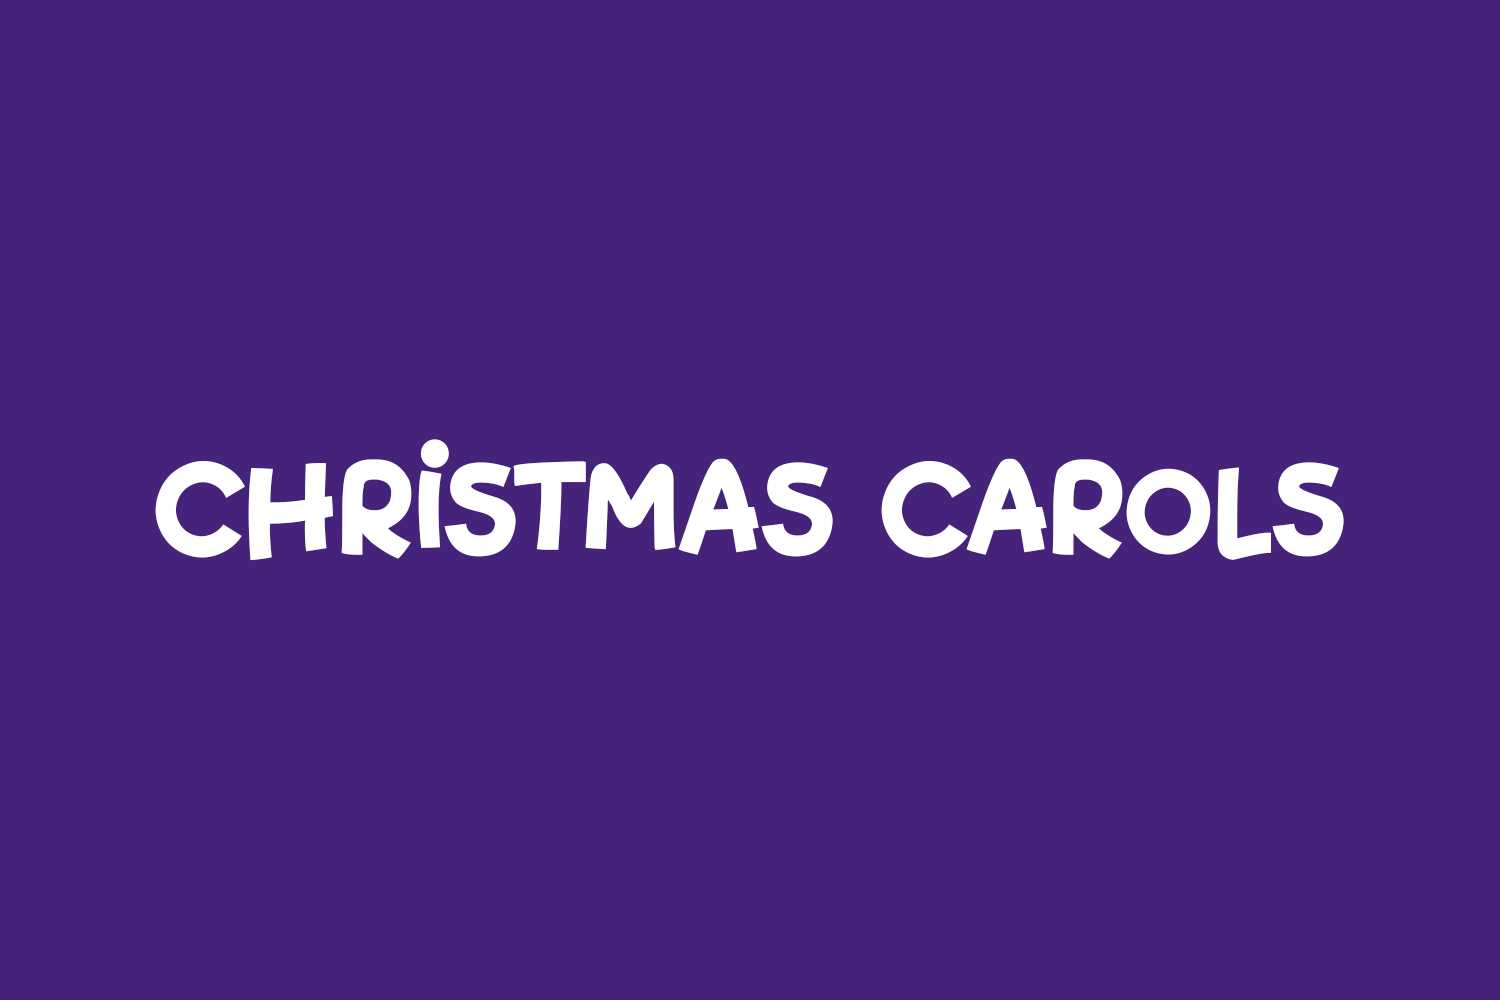 Christmas Carols Free Font